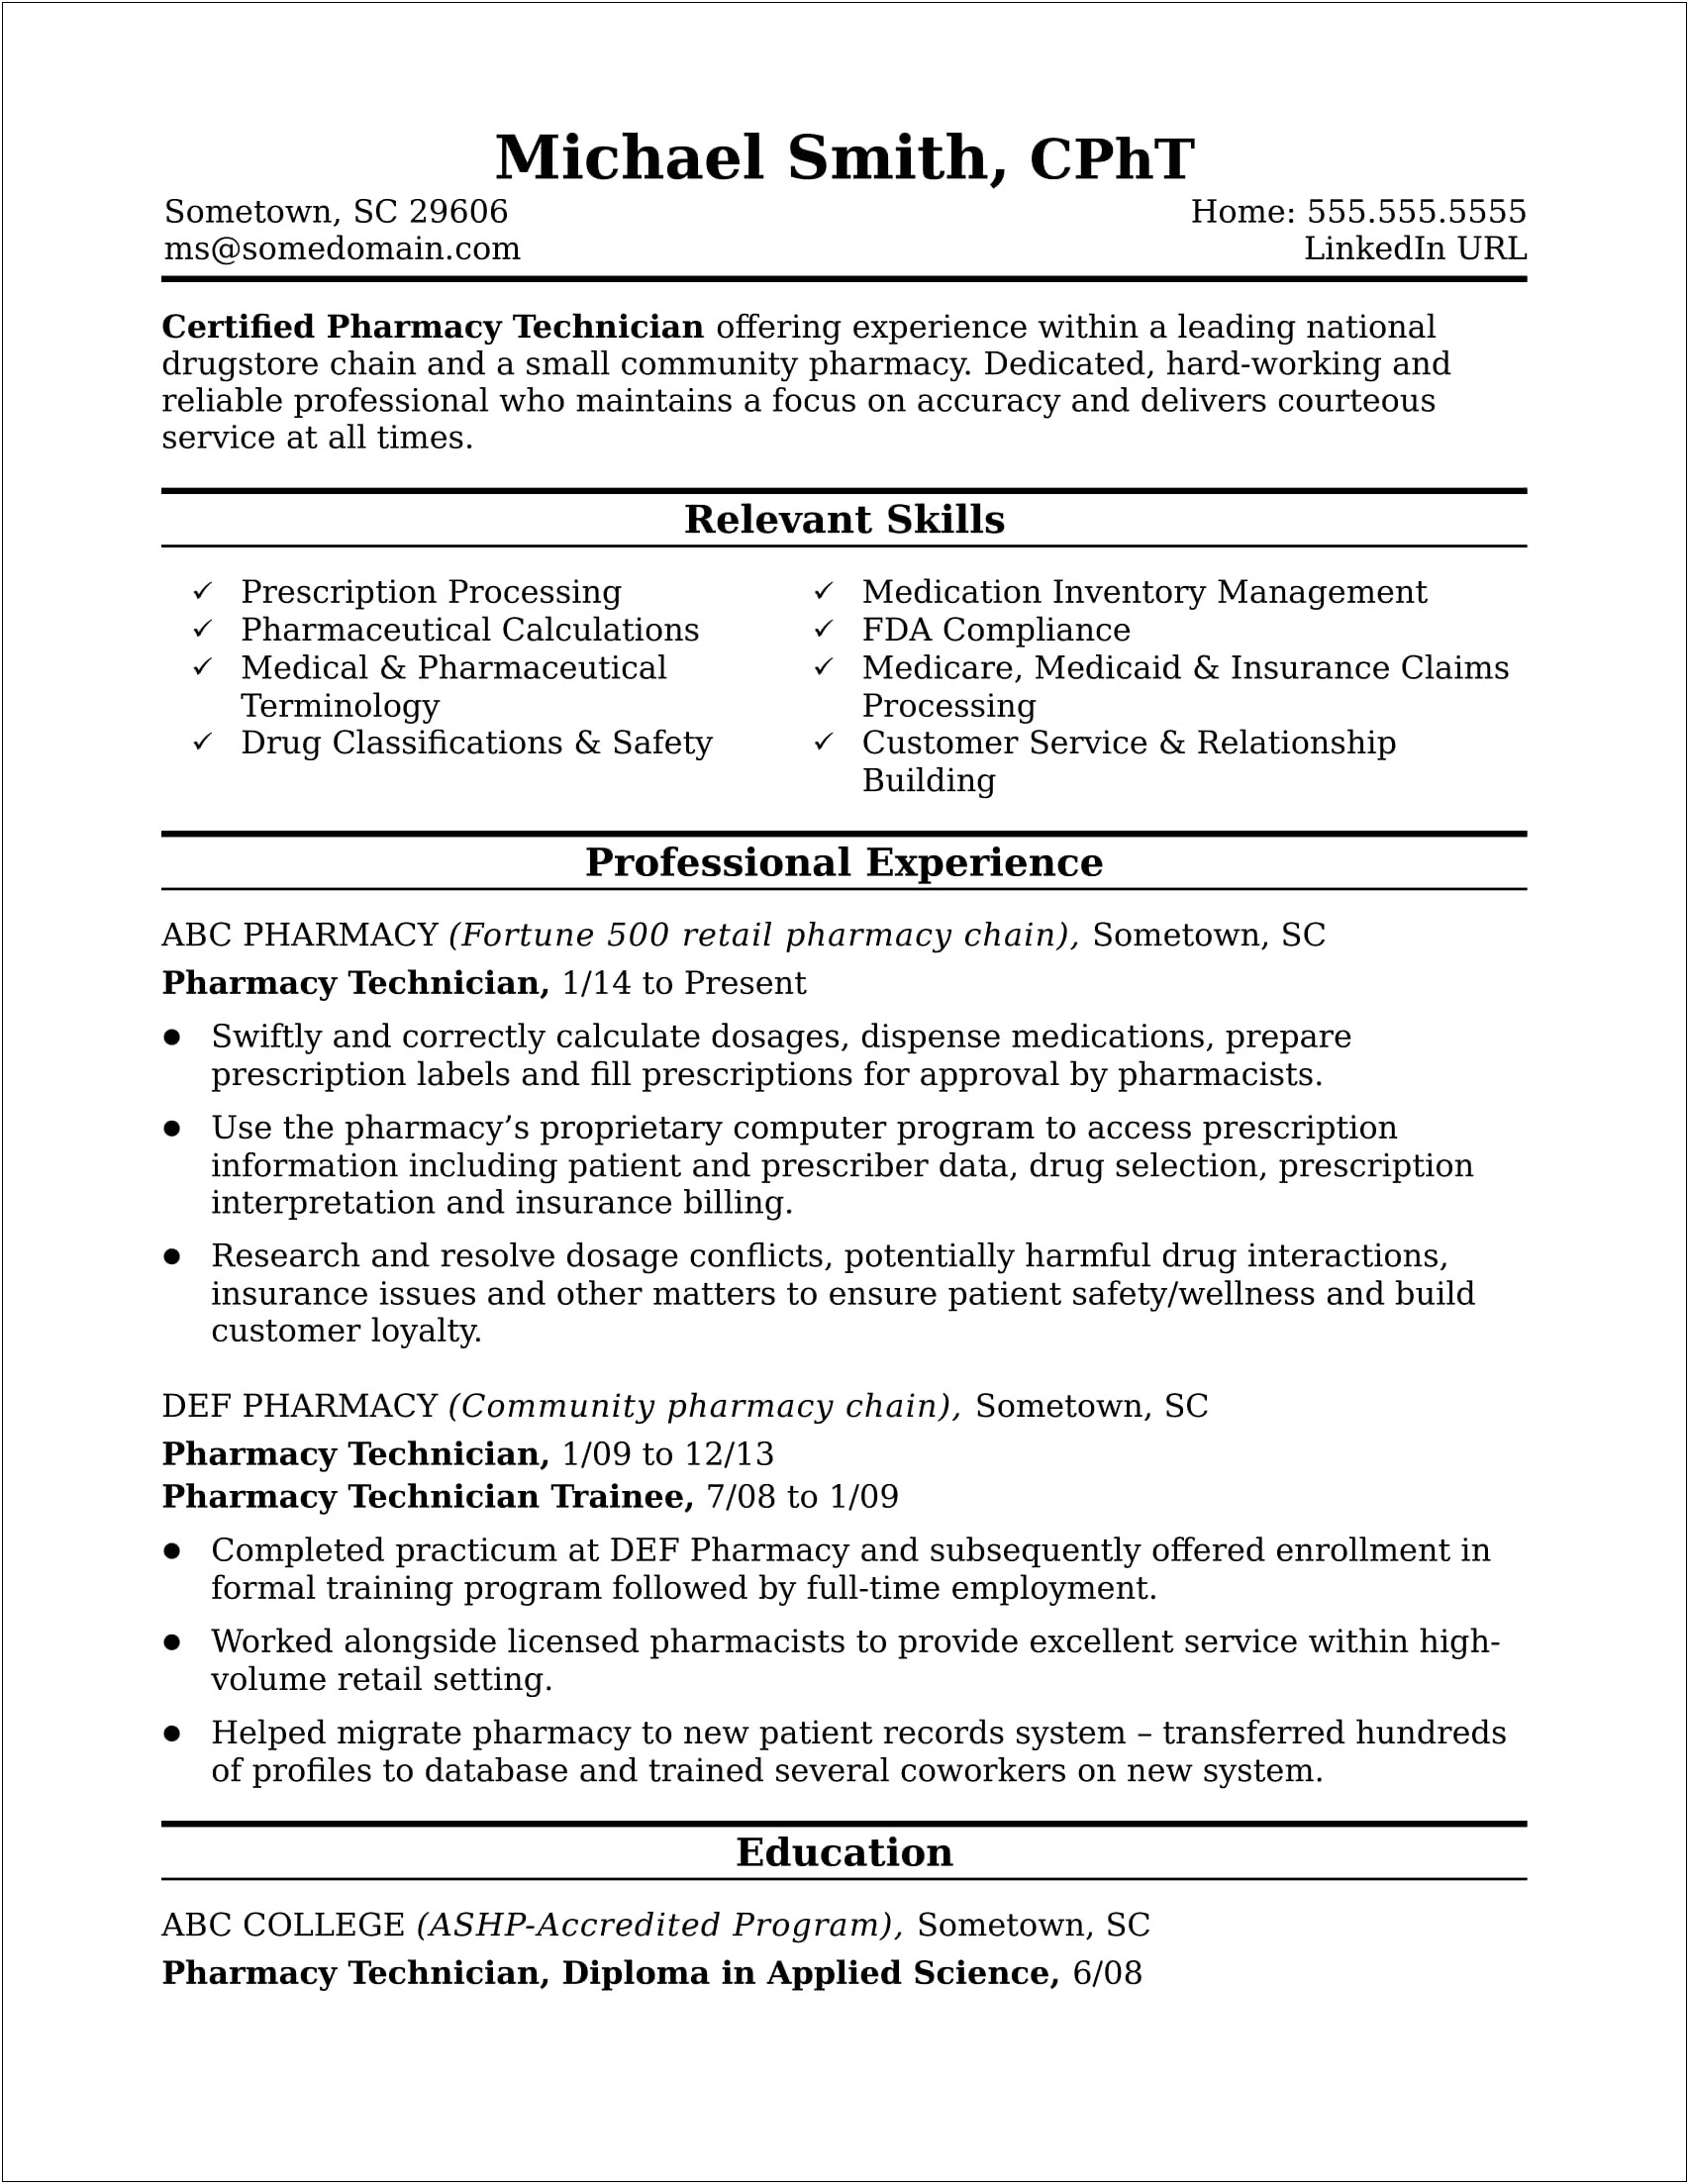 Resume Focus On Current Job